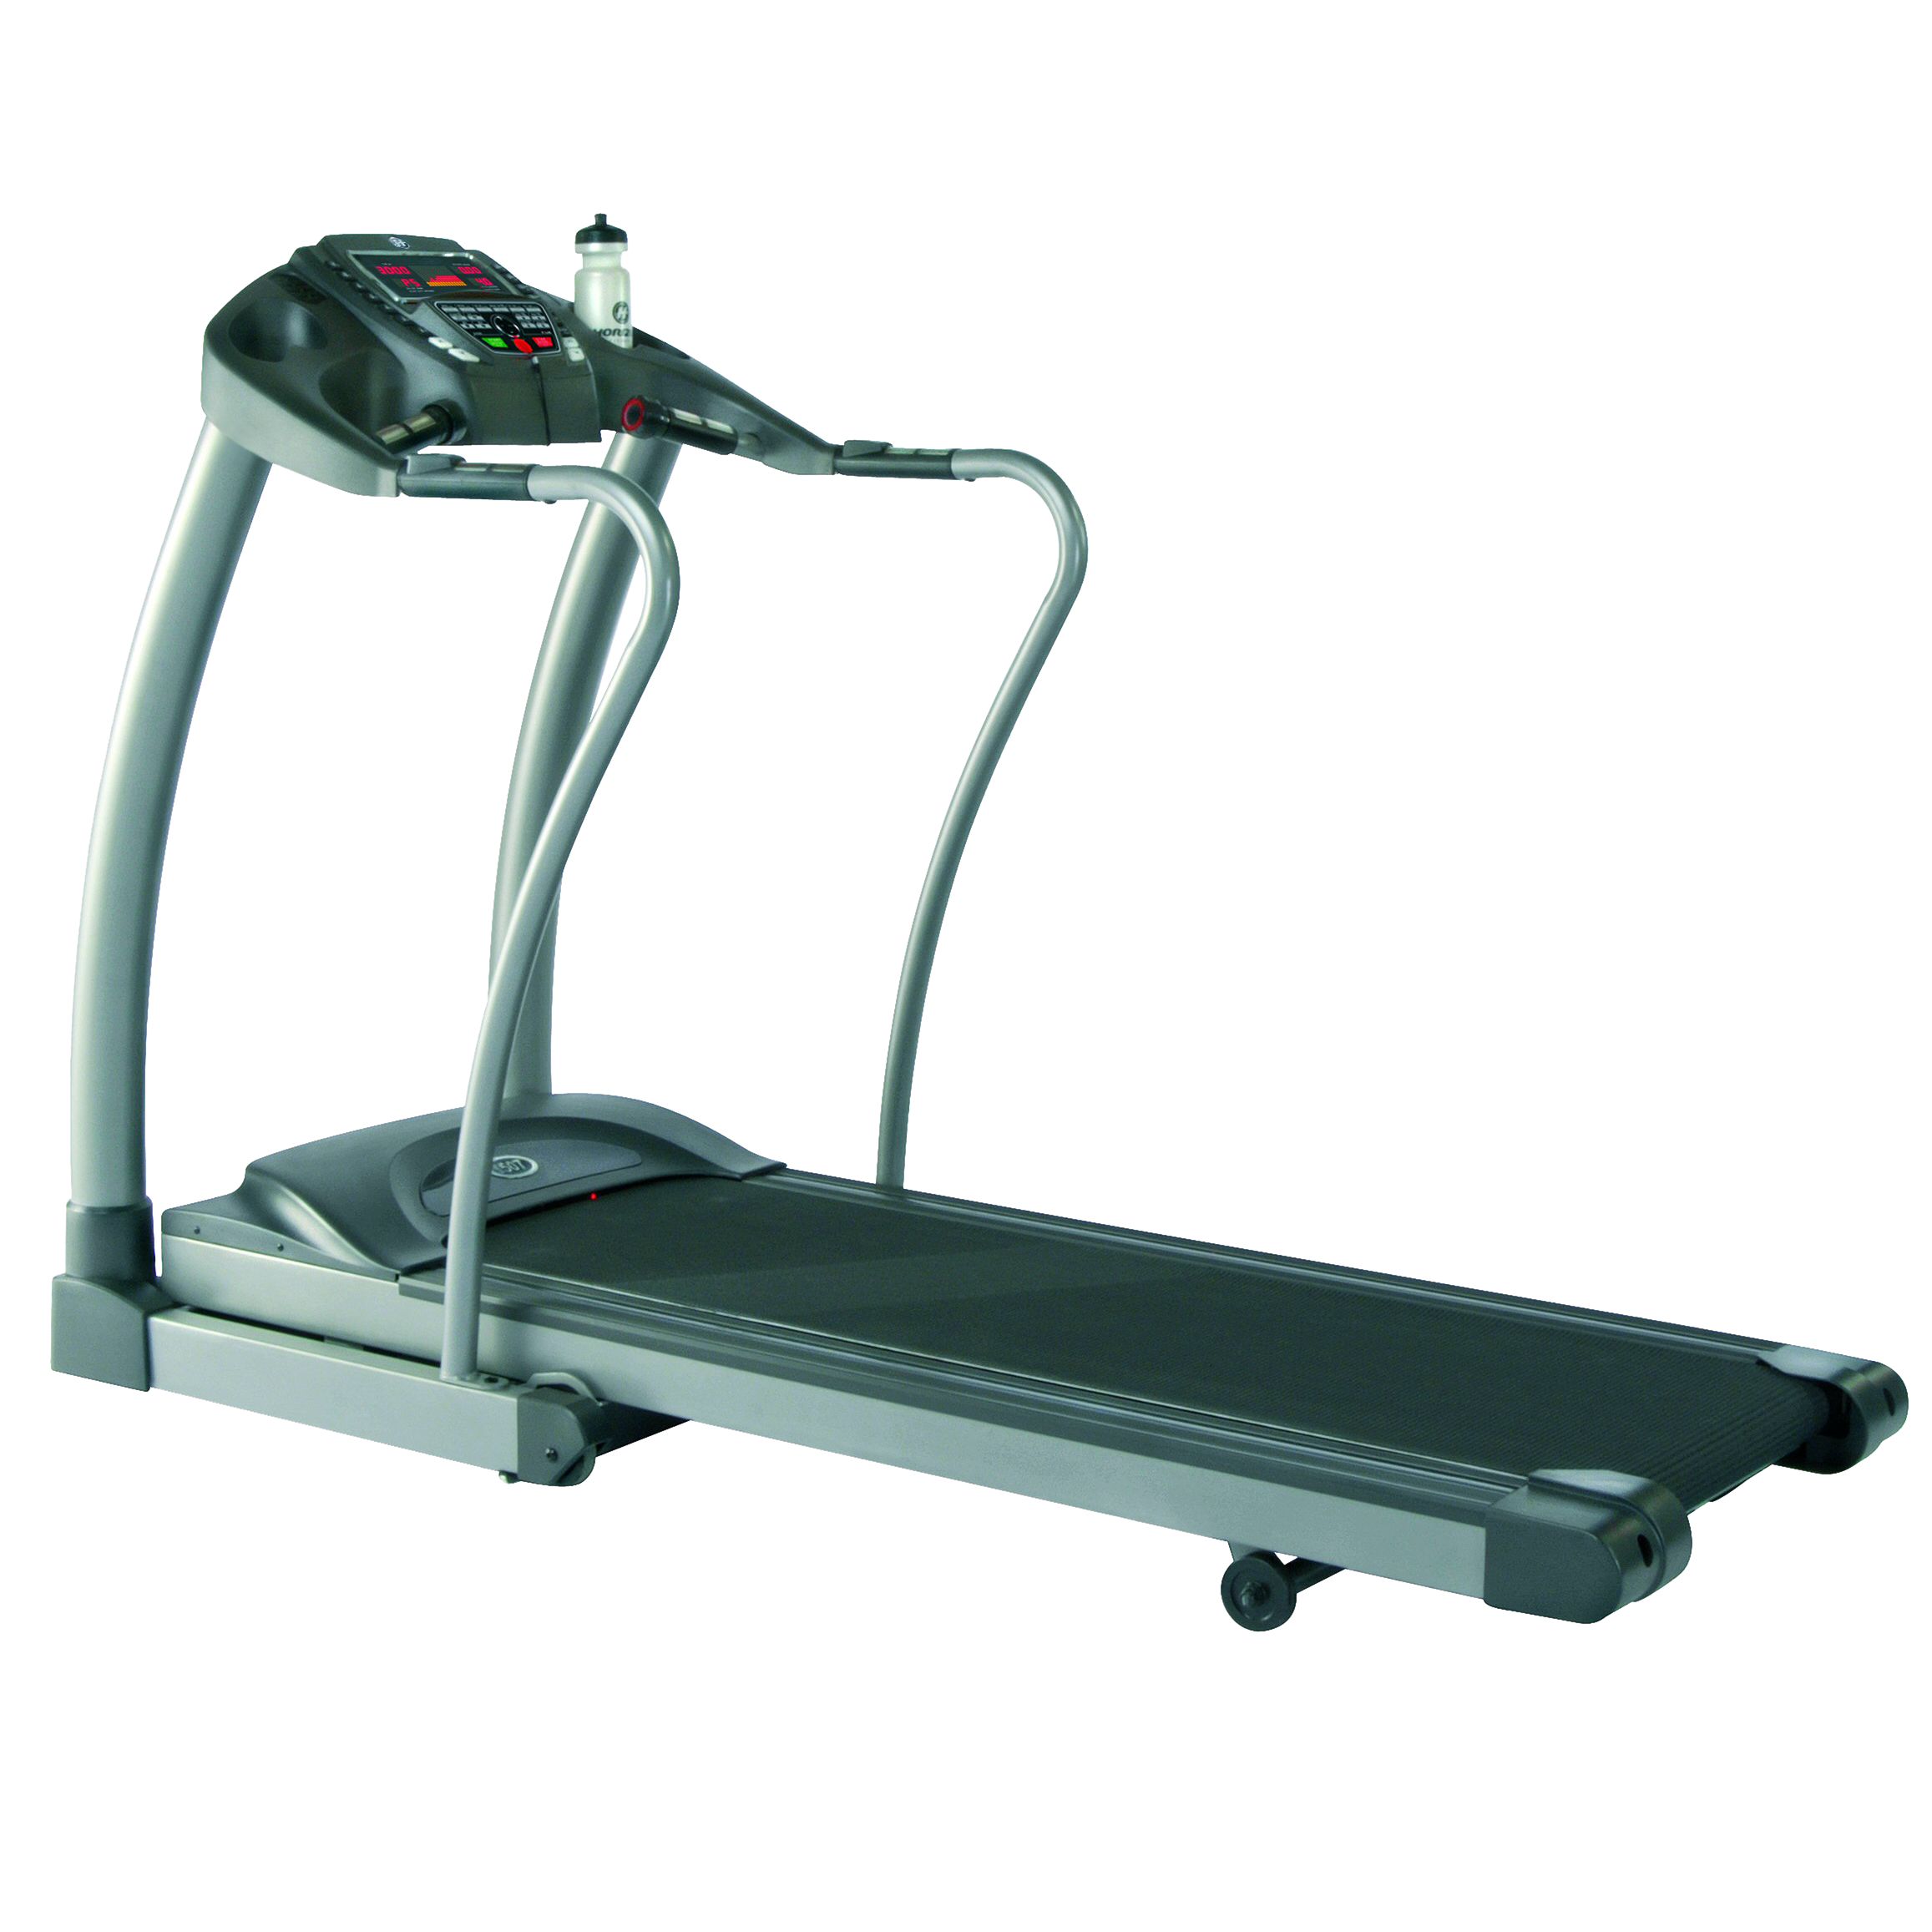 Horizon Elite 507 Folding Treadmill at John Lewis